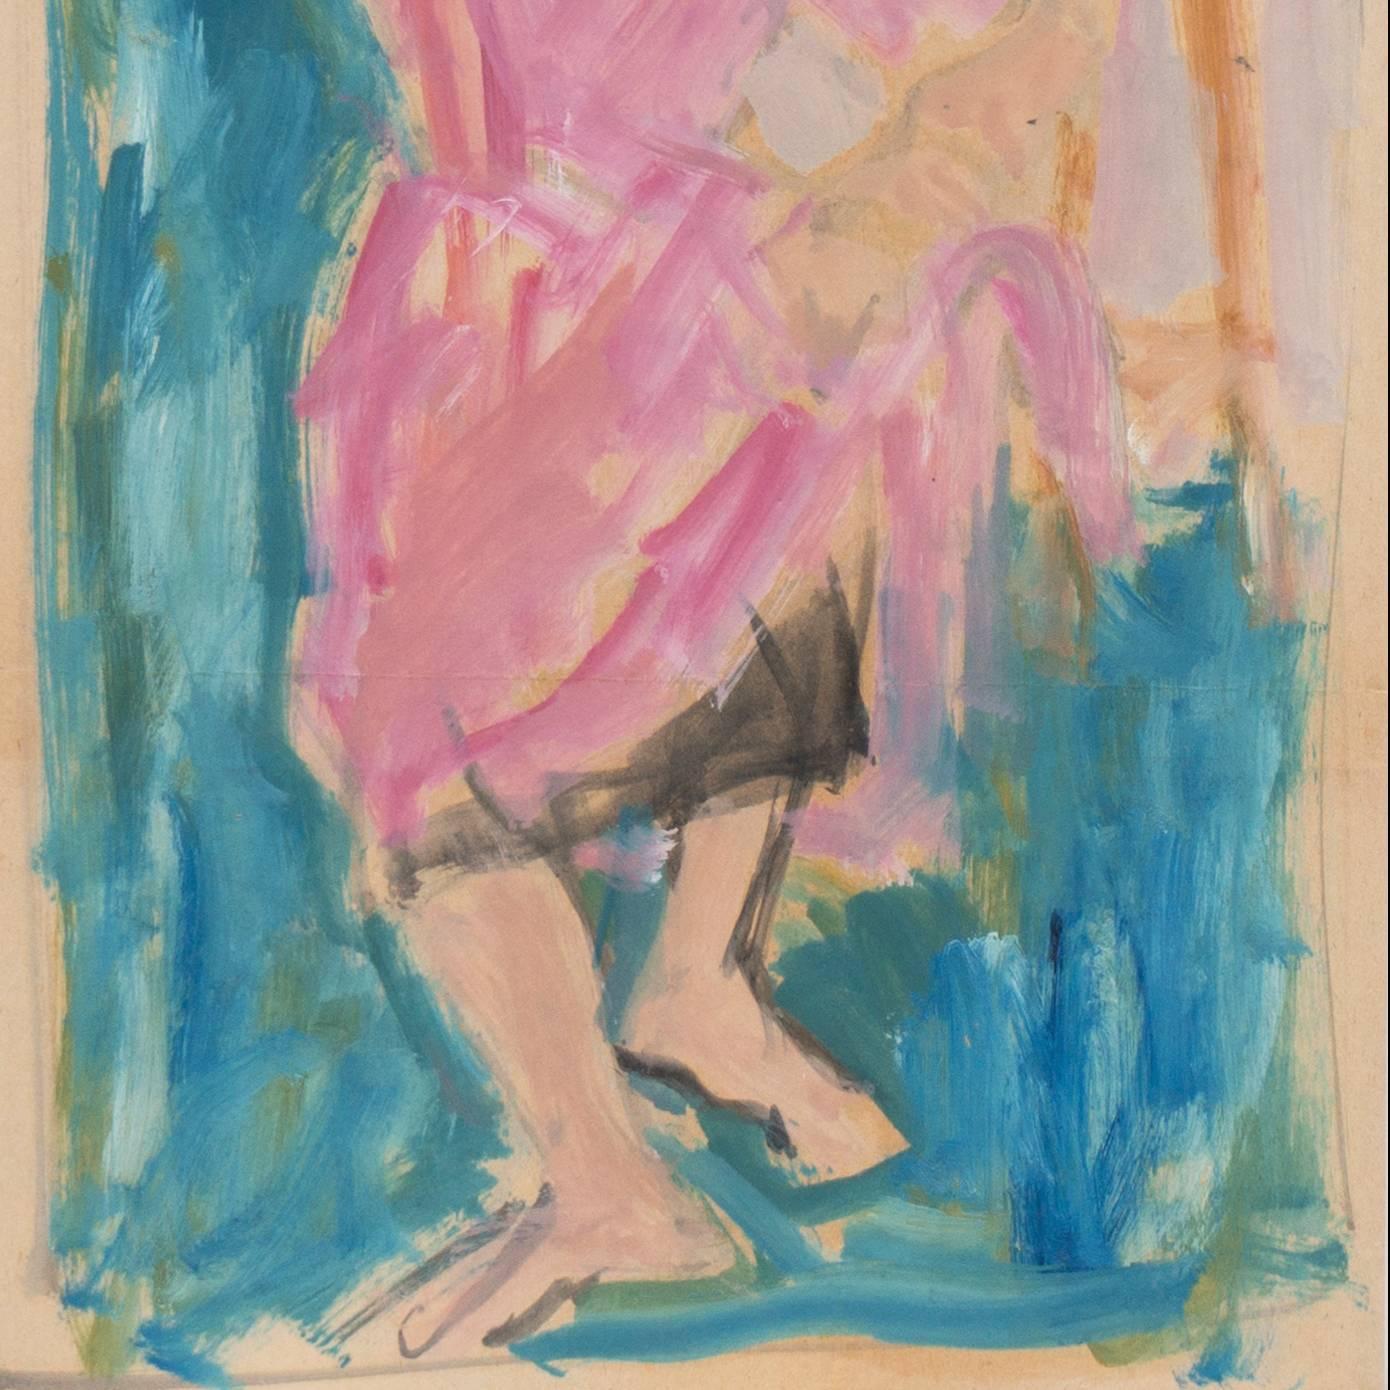 'Dancer in Rose', Paris, Louvre, Académie Chaumière, Carmel, California, LACMA - Post-Impressionist Painting by Victor Di Gesu